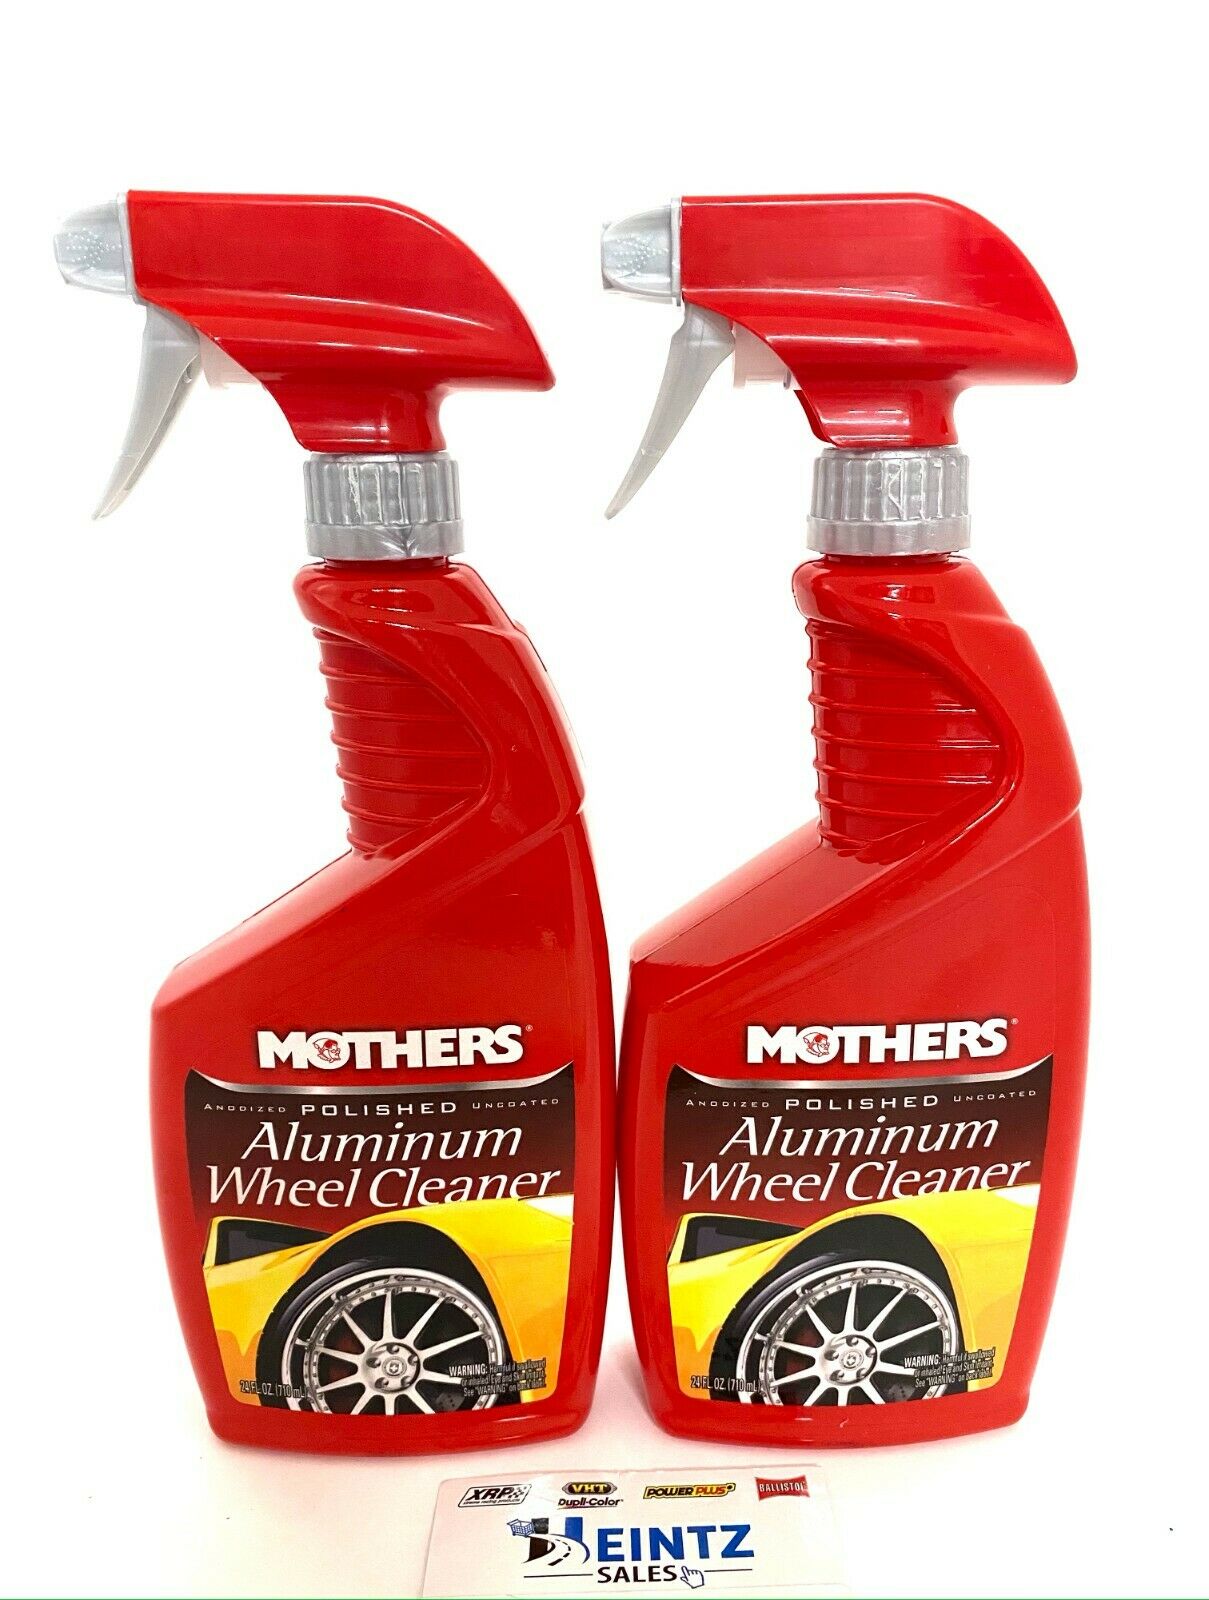 MOTHERS 06024 Polished Aluminum Wheel Cleaner 2 PACK - Dissolves Dust & Grime - 24 oz.